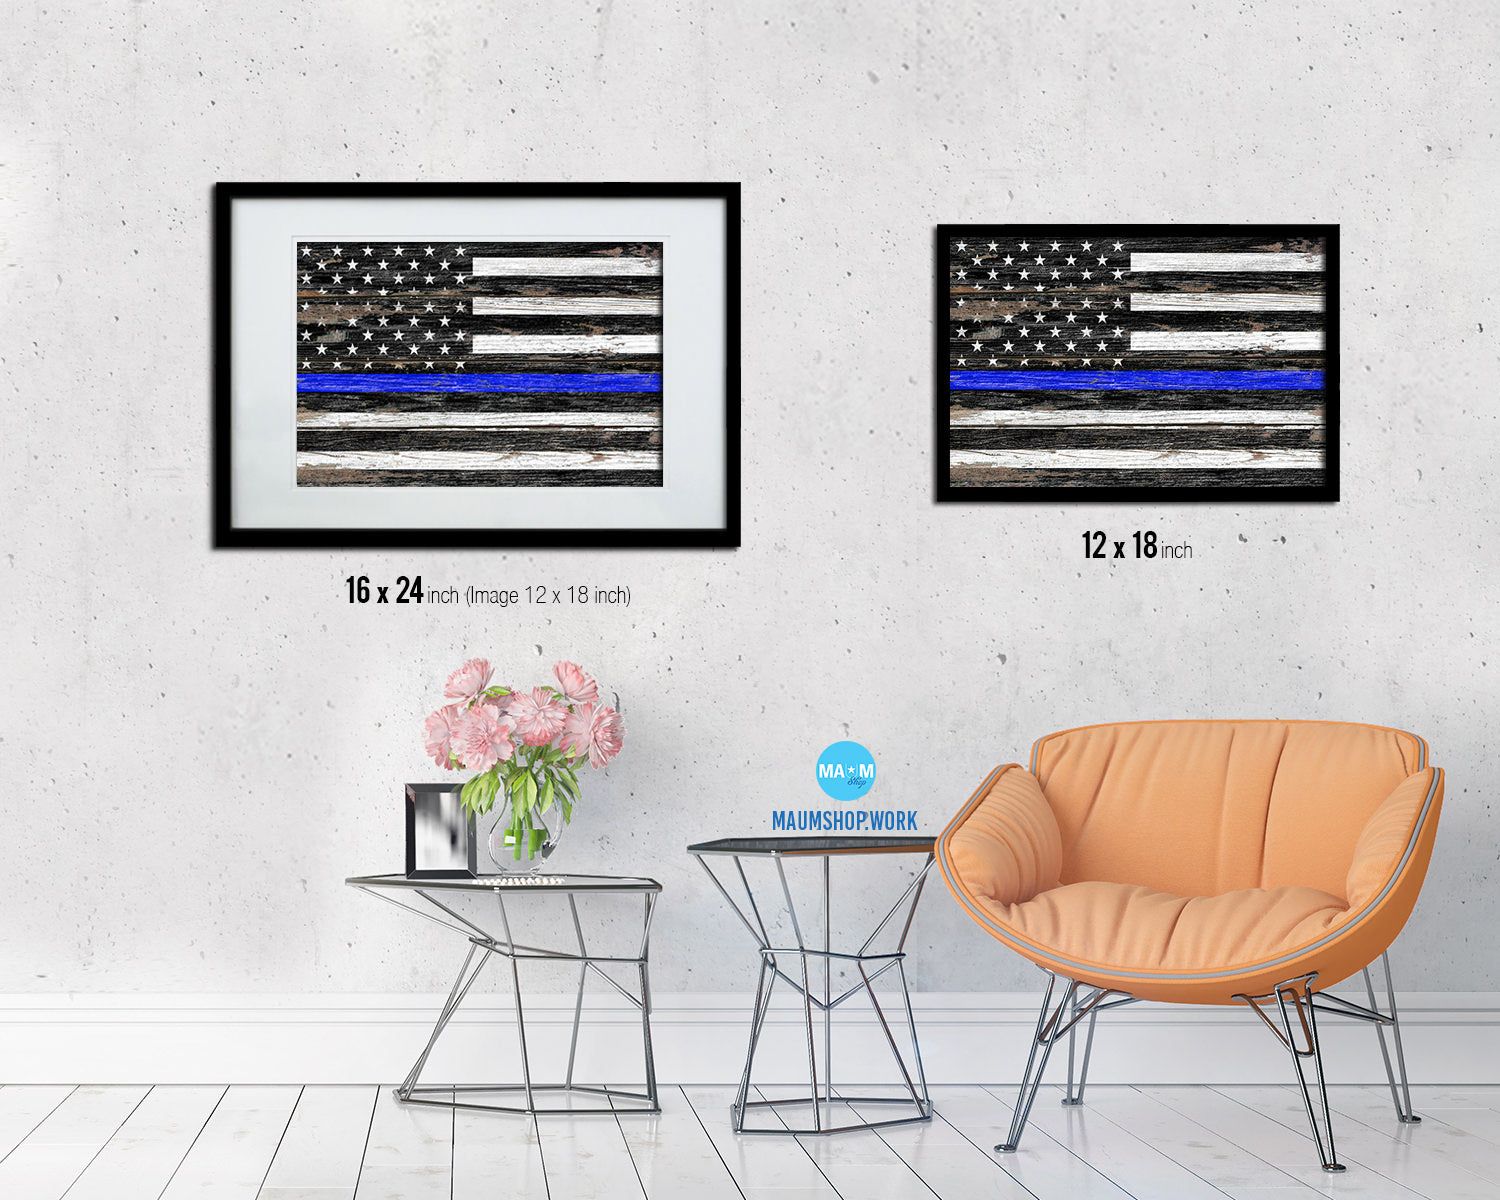 Thin Blue Line Honoring Law Enforcement American, Blue lives matter Wood Rustic Flag Framed Print Art